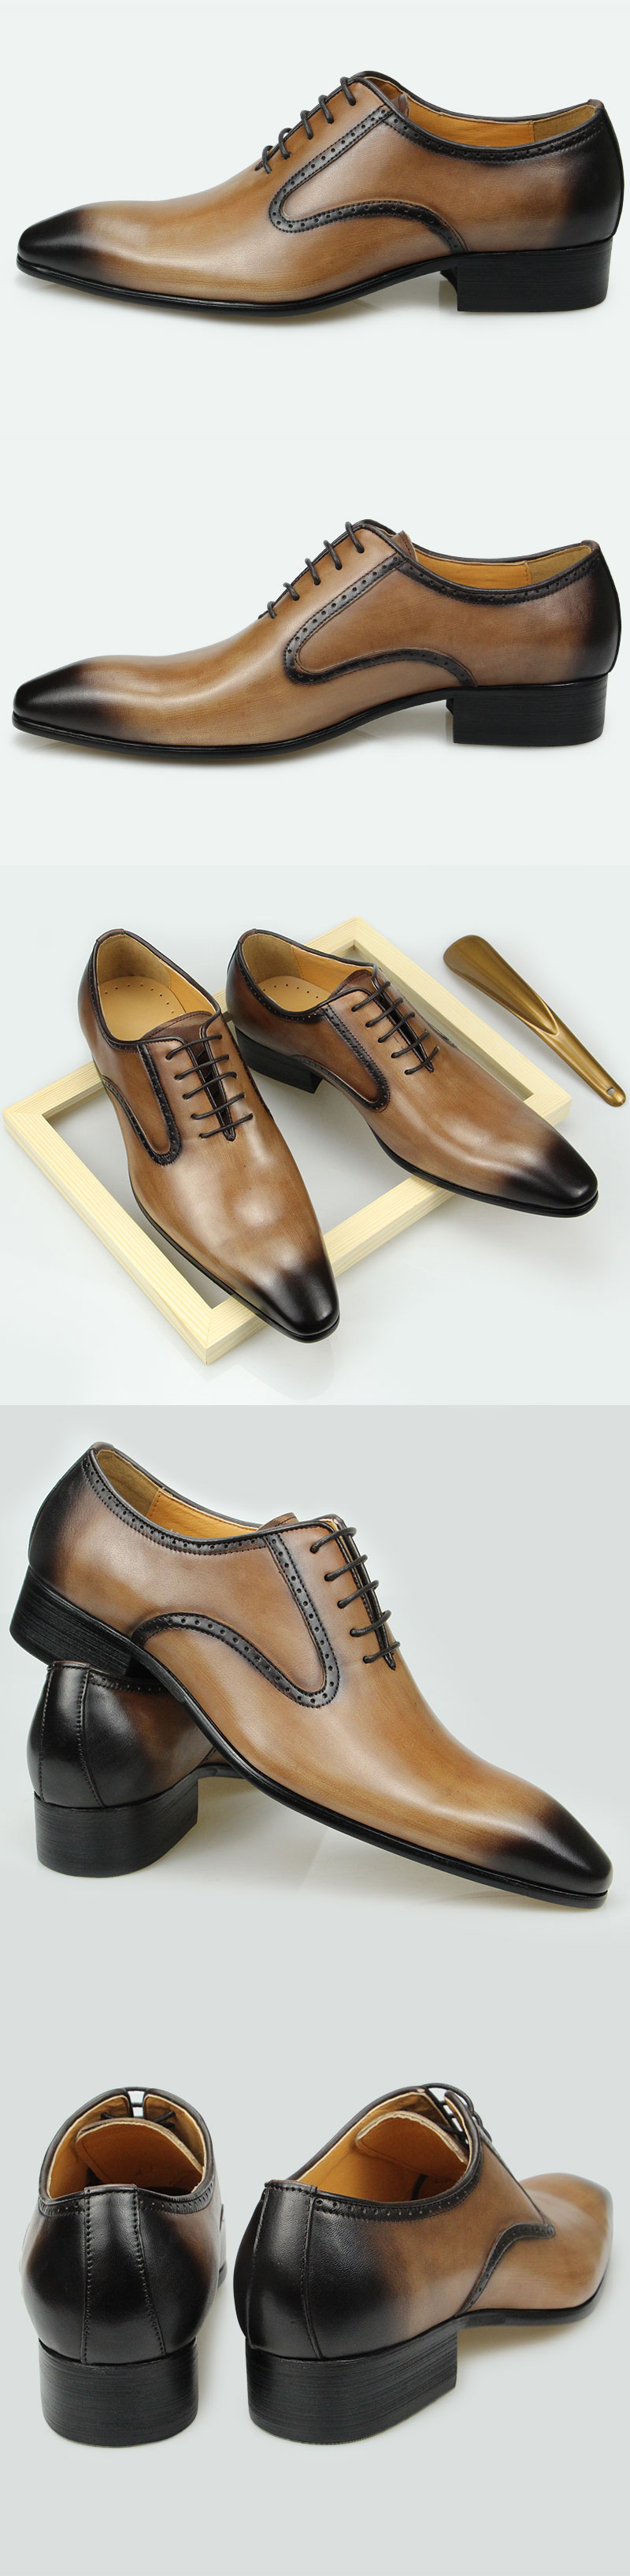 come4buy.com-Casual Oxford Shoes Fir Männer